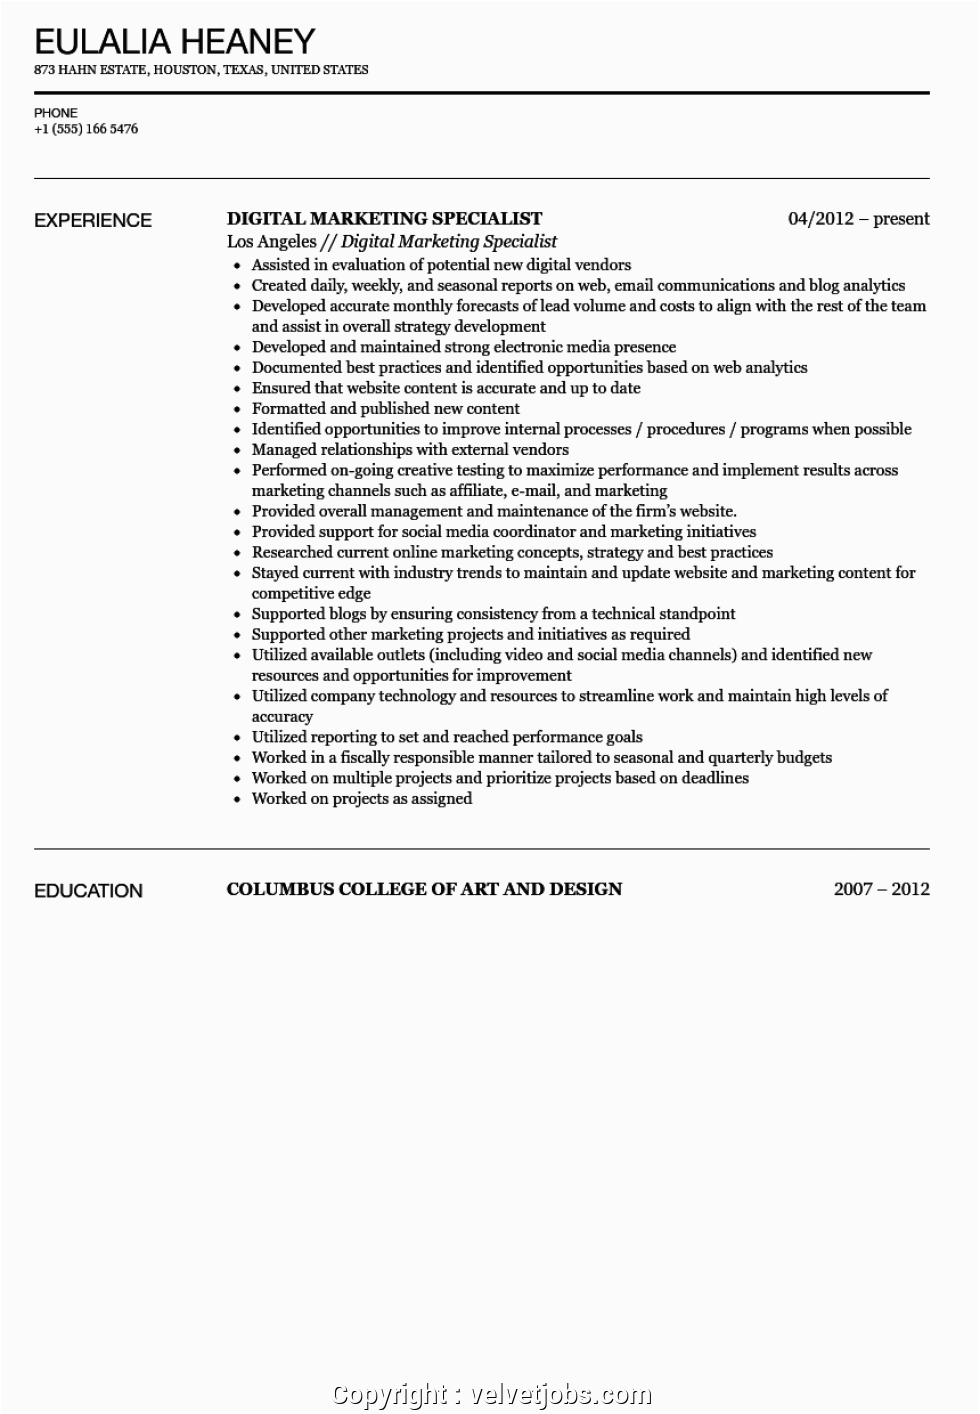 modern digital marketing specialist resume sample